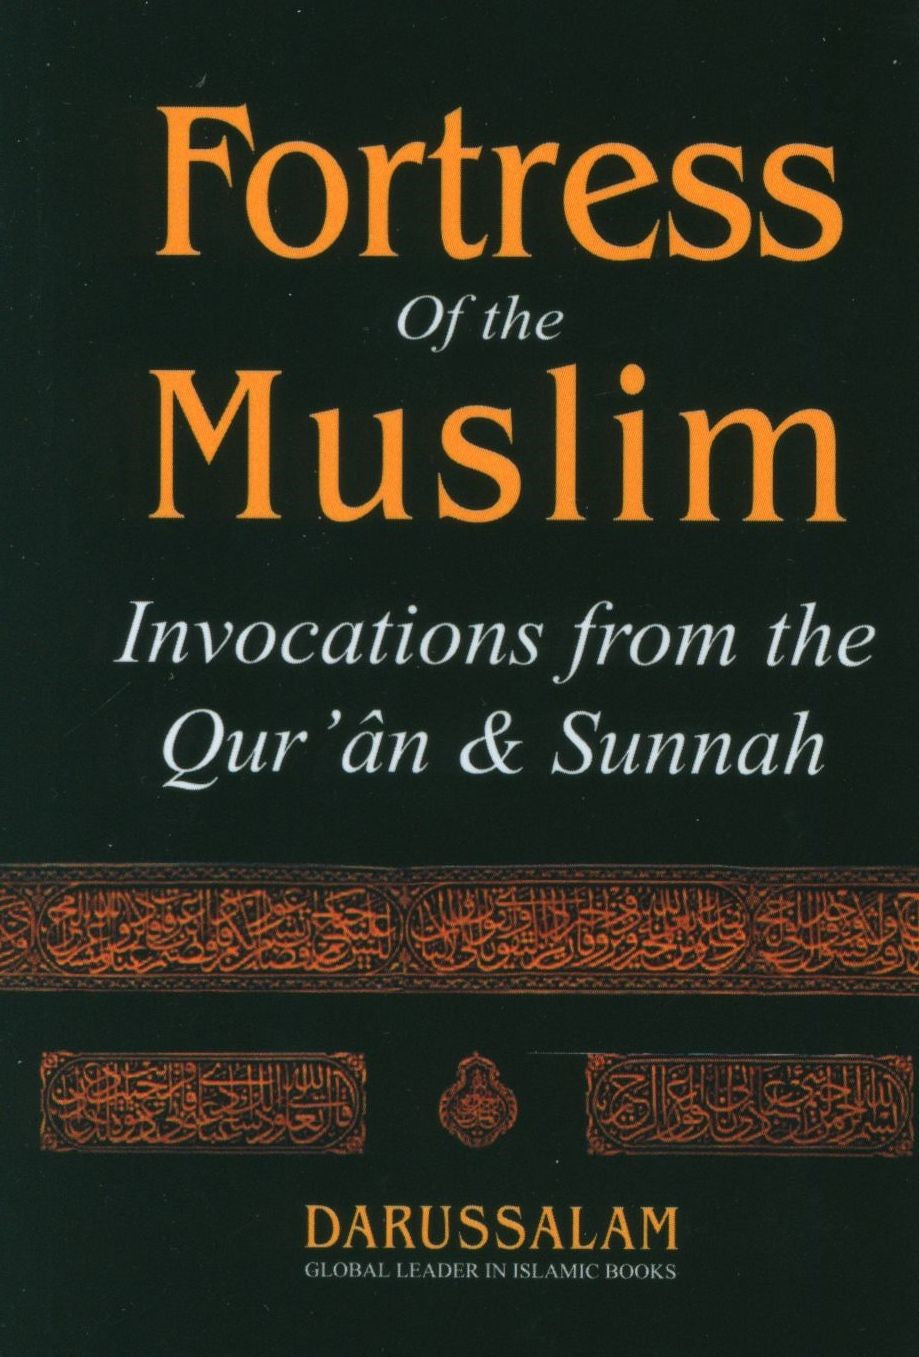 Fortress of the Muslim (English - Arabic)